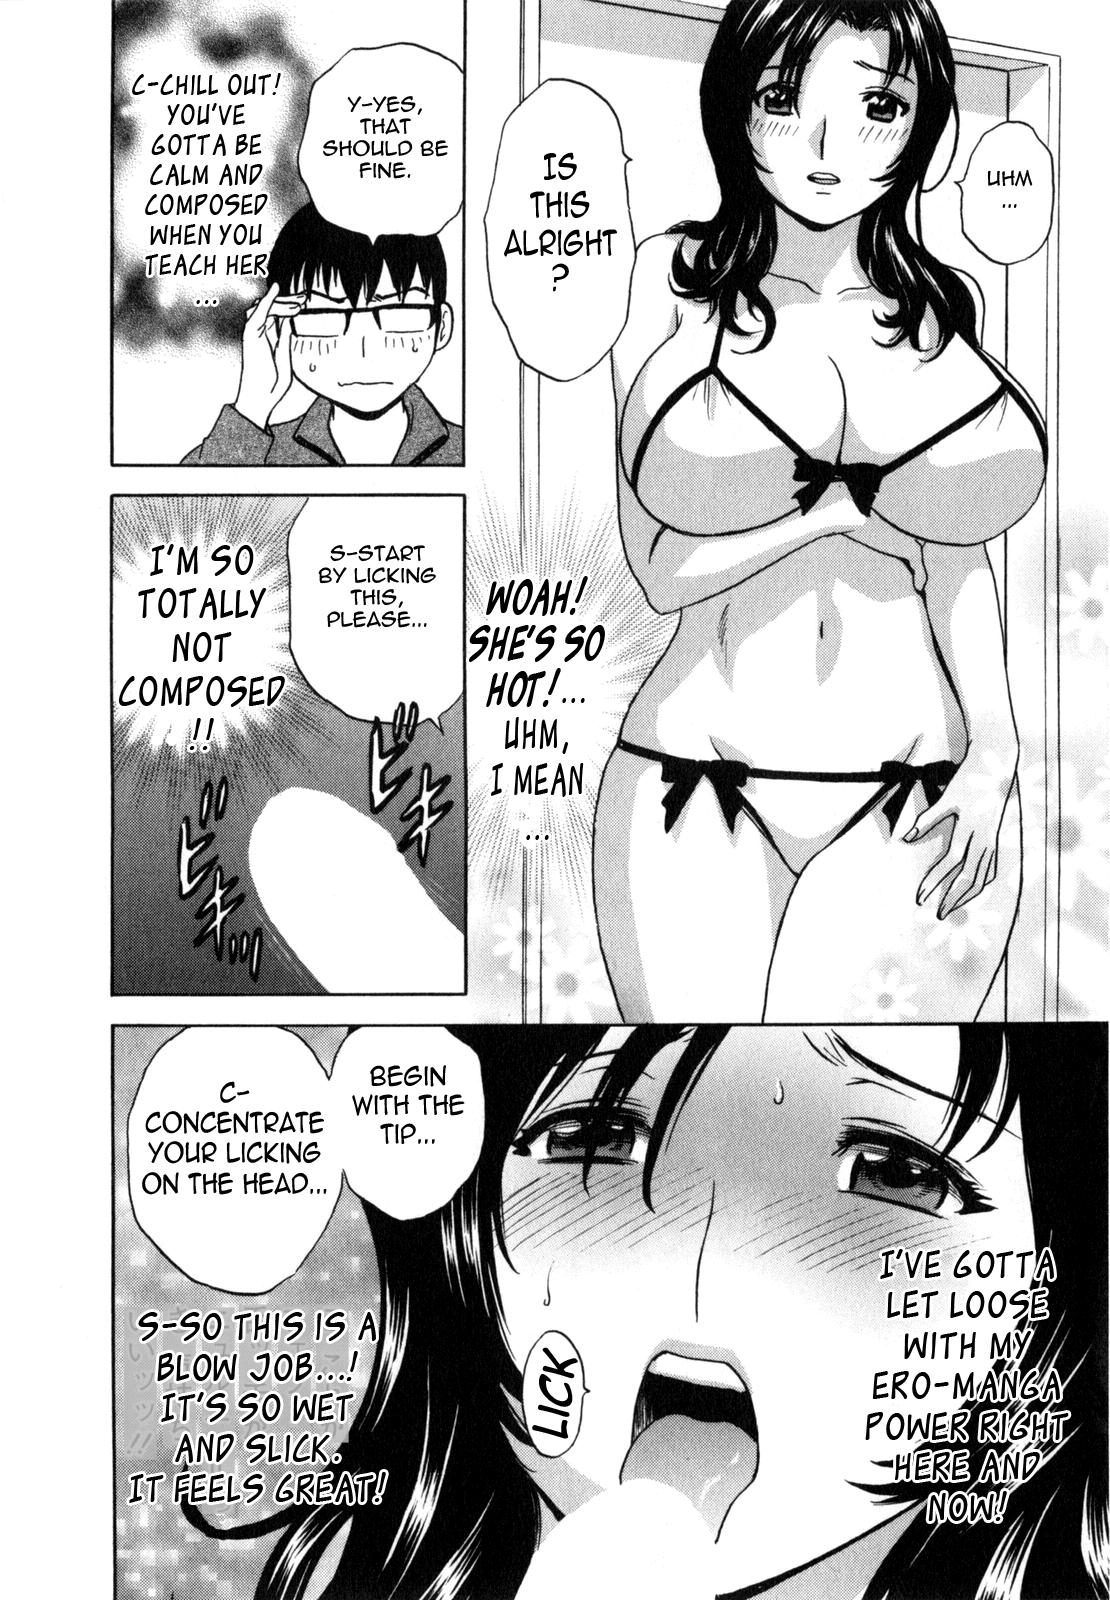 [Hidemaru] Life with Married Women Just Like a Manga 1 - Ch. 1-4 [English] {Tadanohito} 16